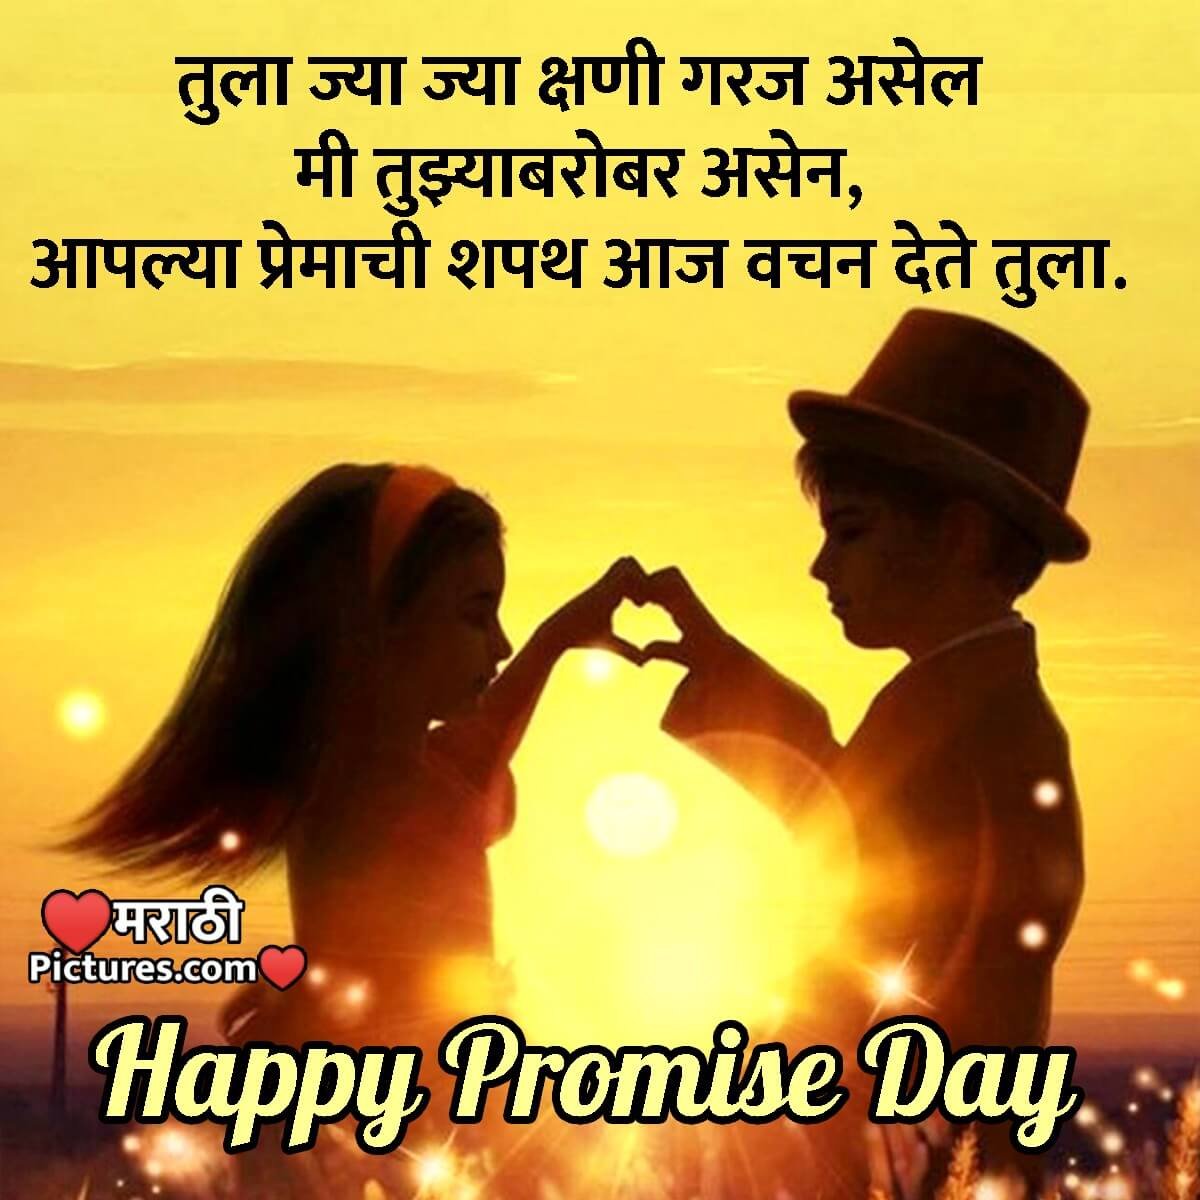 Happy Promise Day Marathi Image For Boy Friend